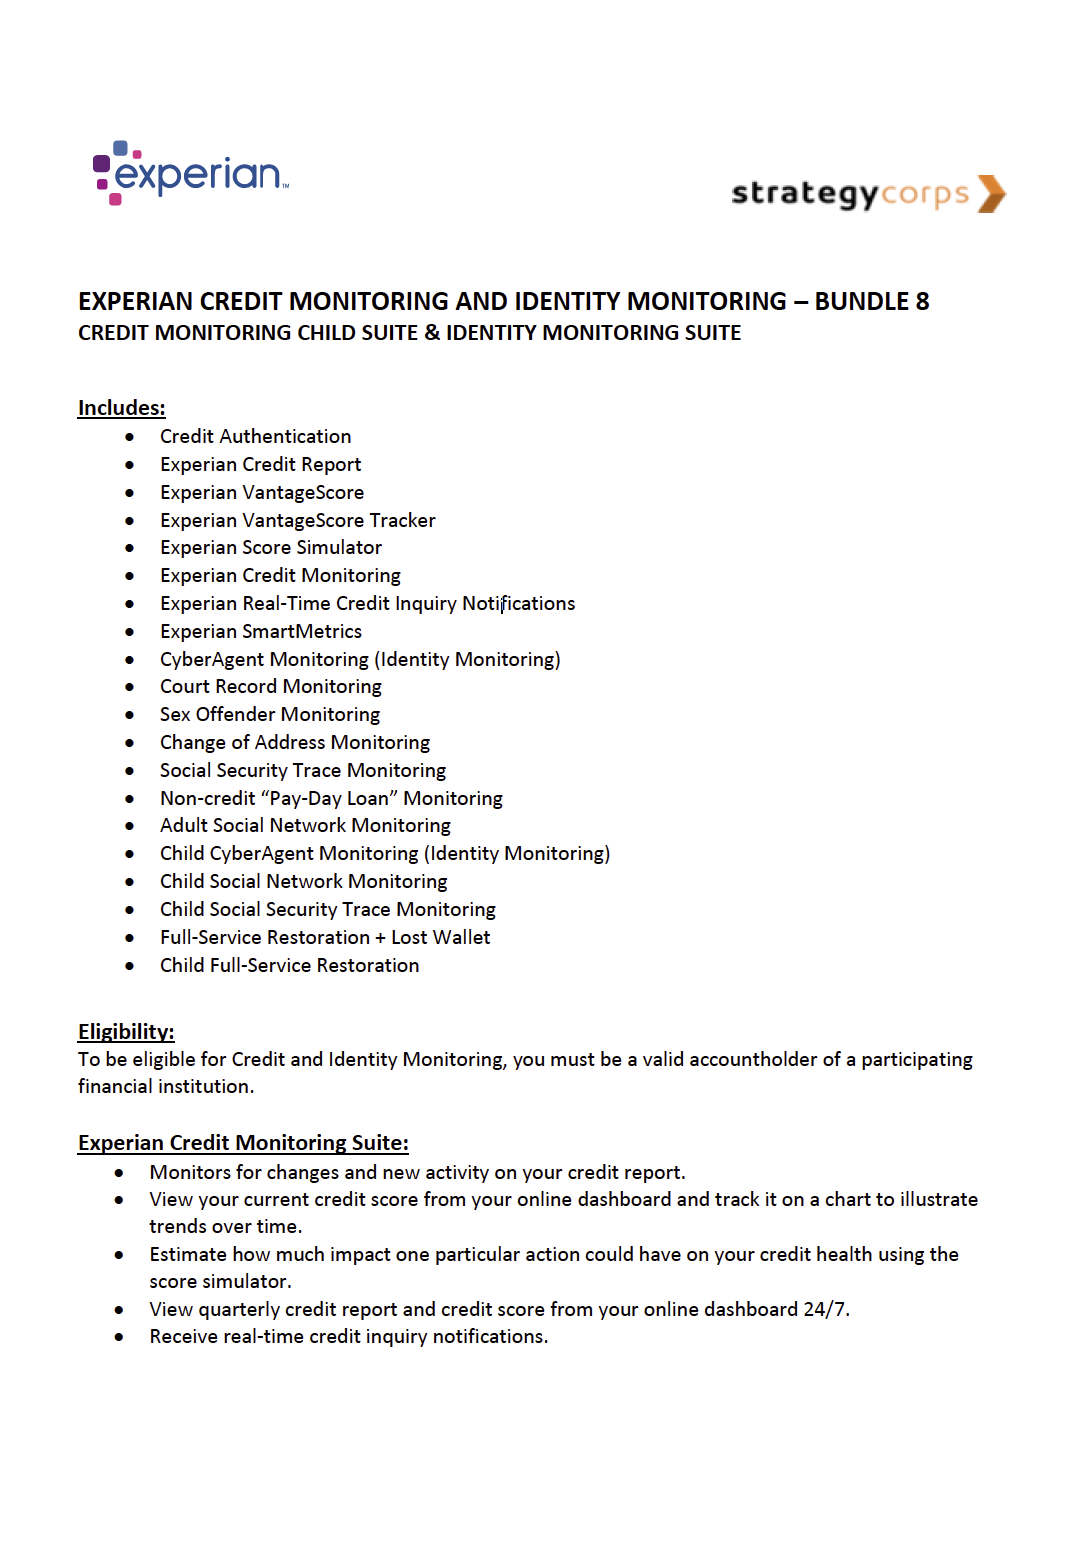 Experian Credit & Identity Monitoring - Bundle 8